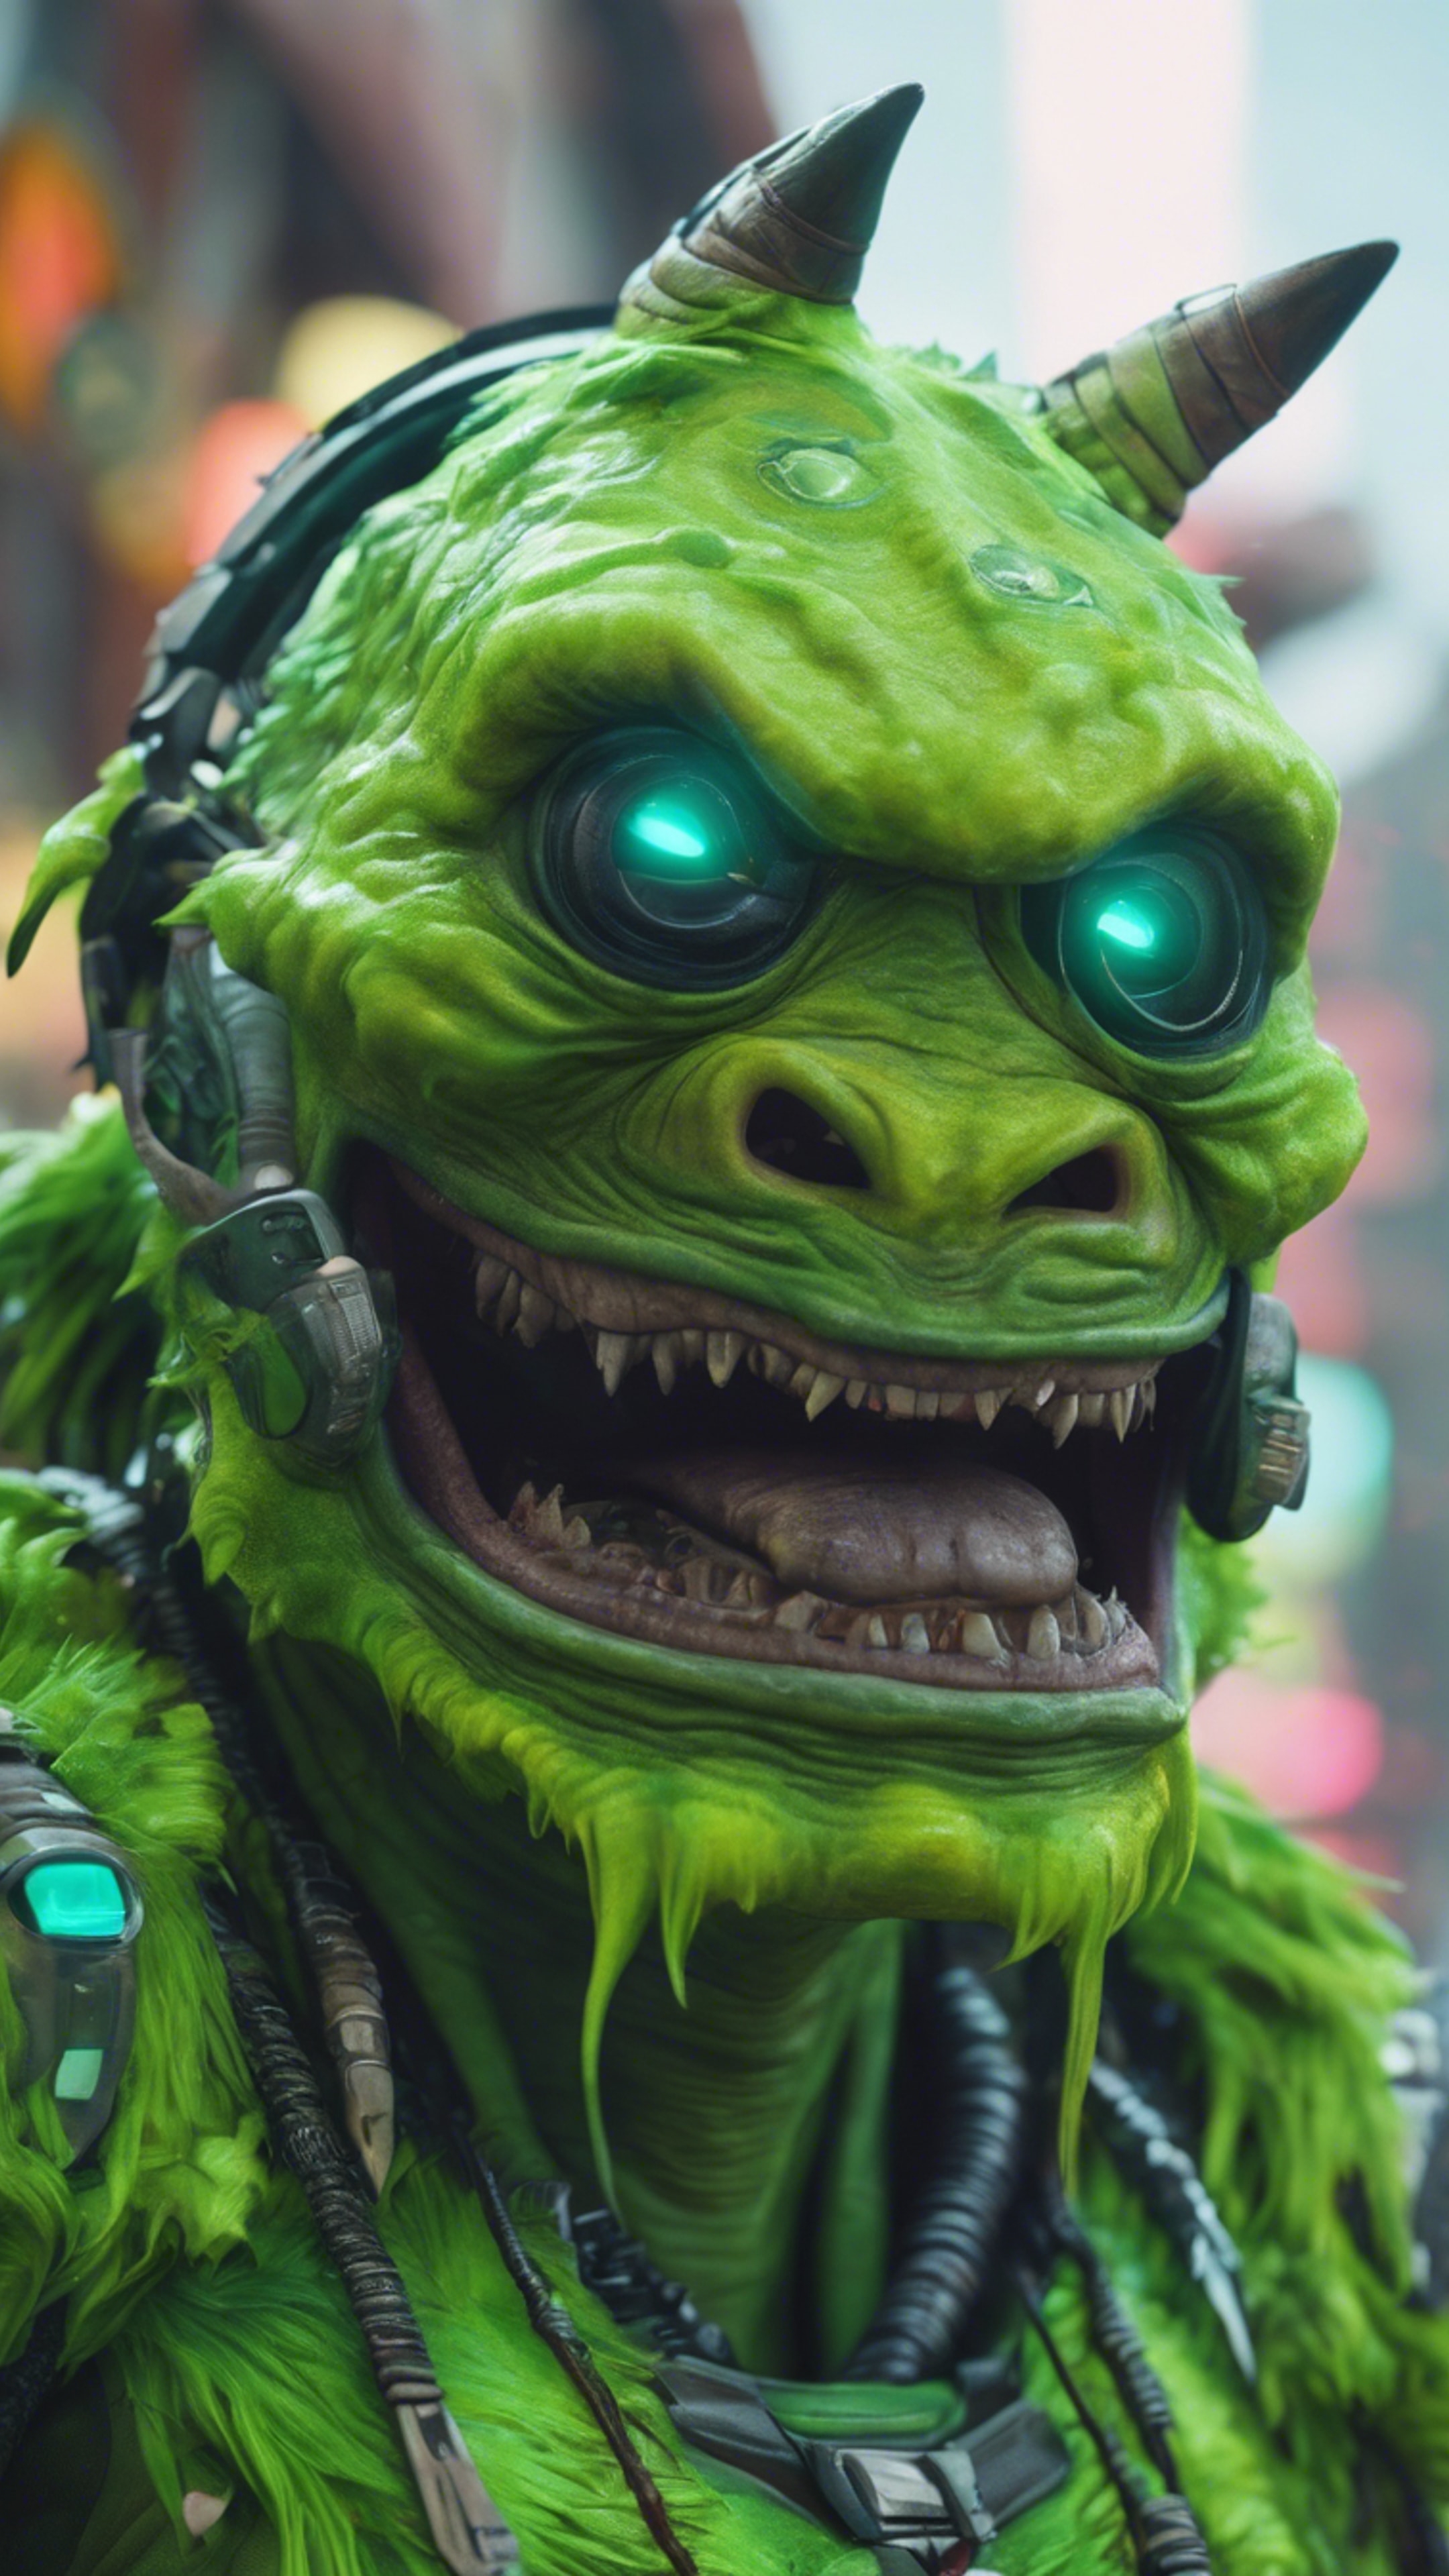 A neon green monster avatar in a popular video game Papel de parede[af5fbbdb1ec04a35bd90]